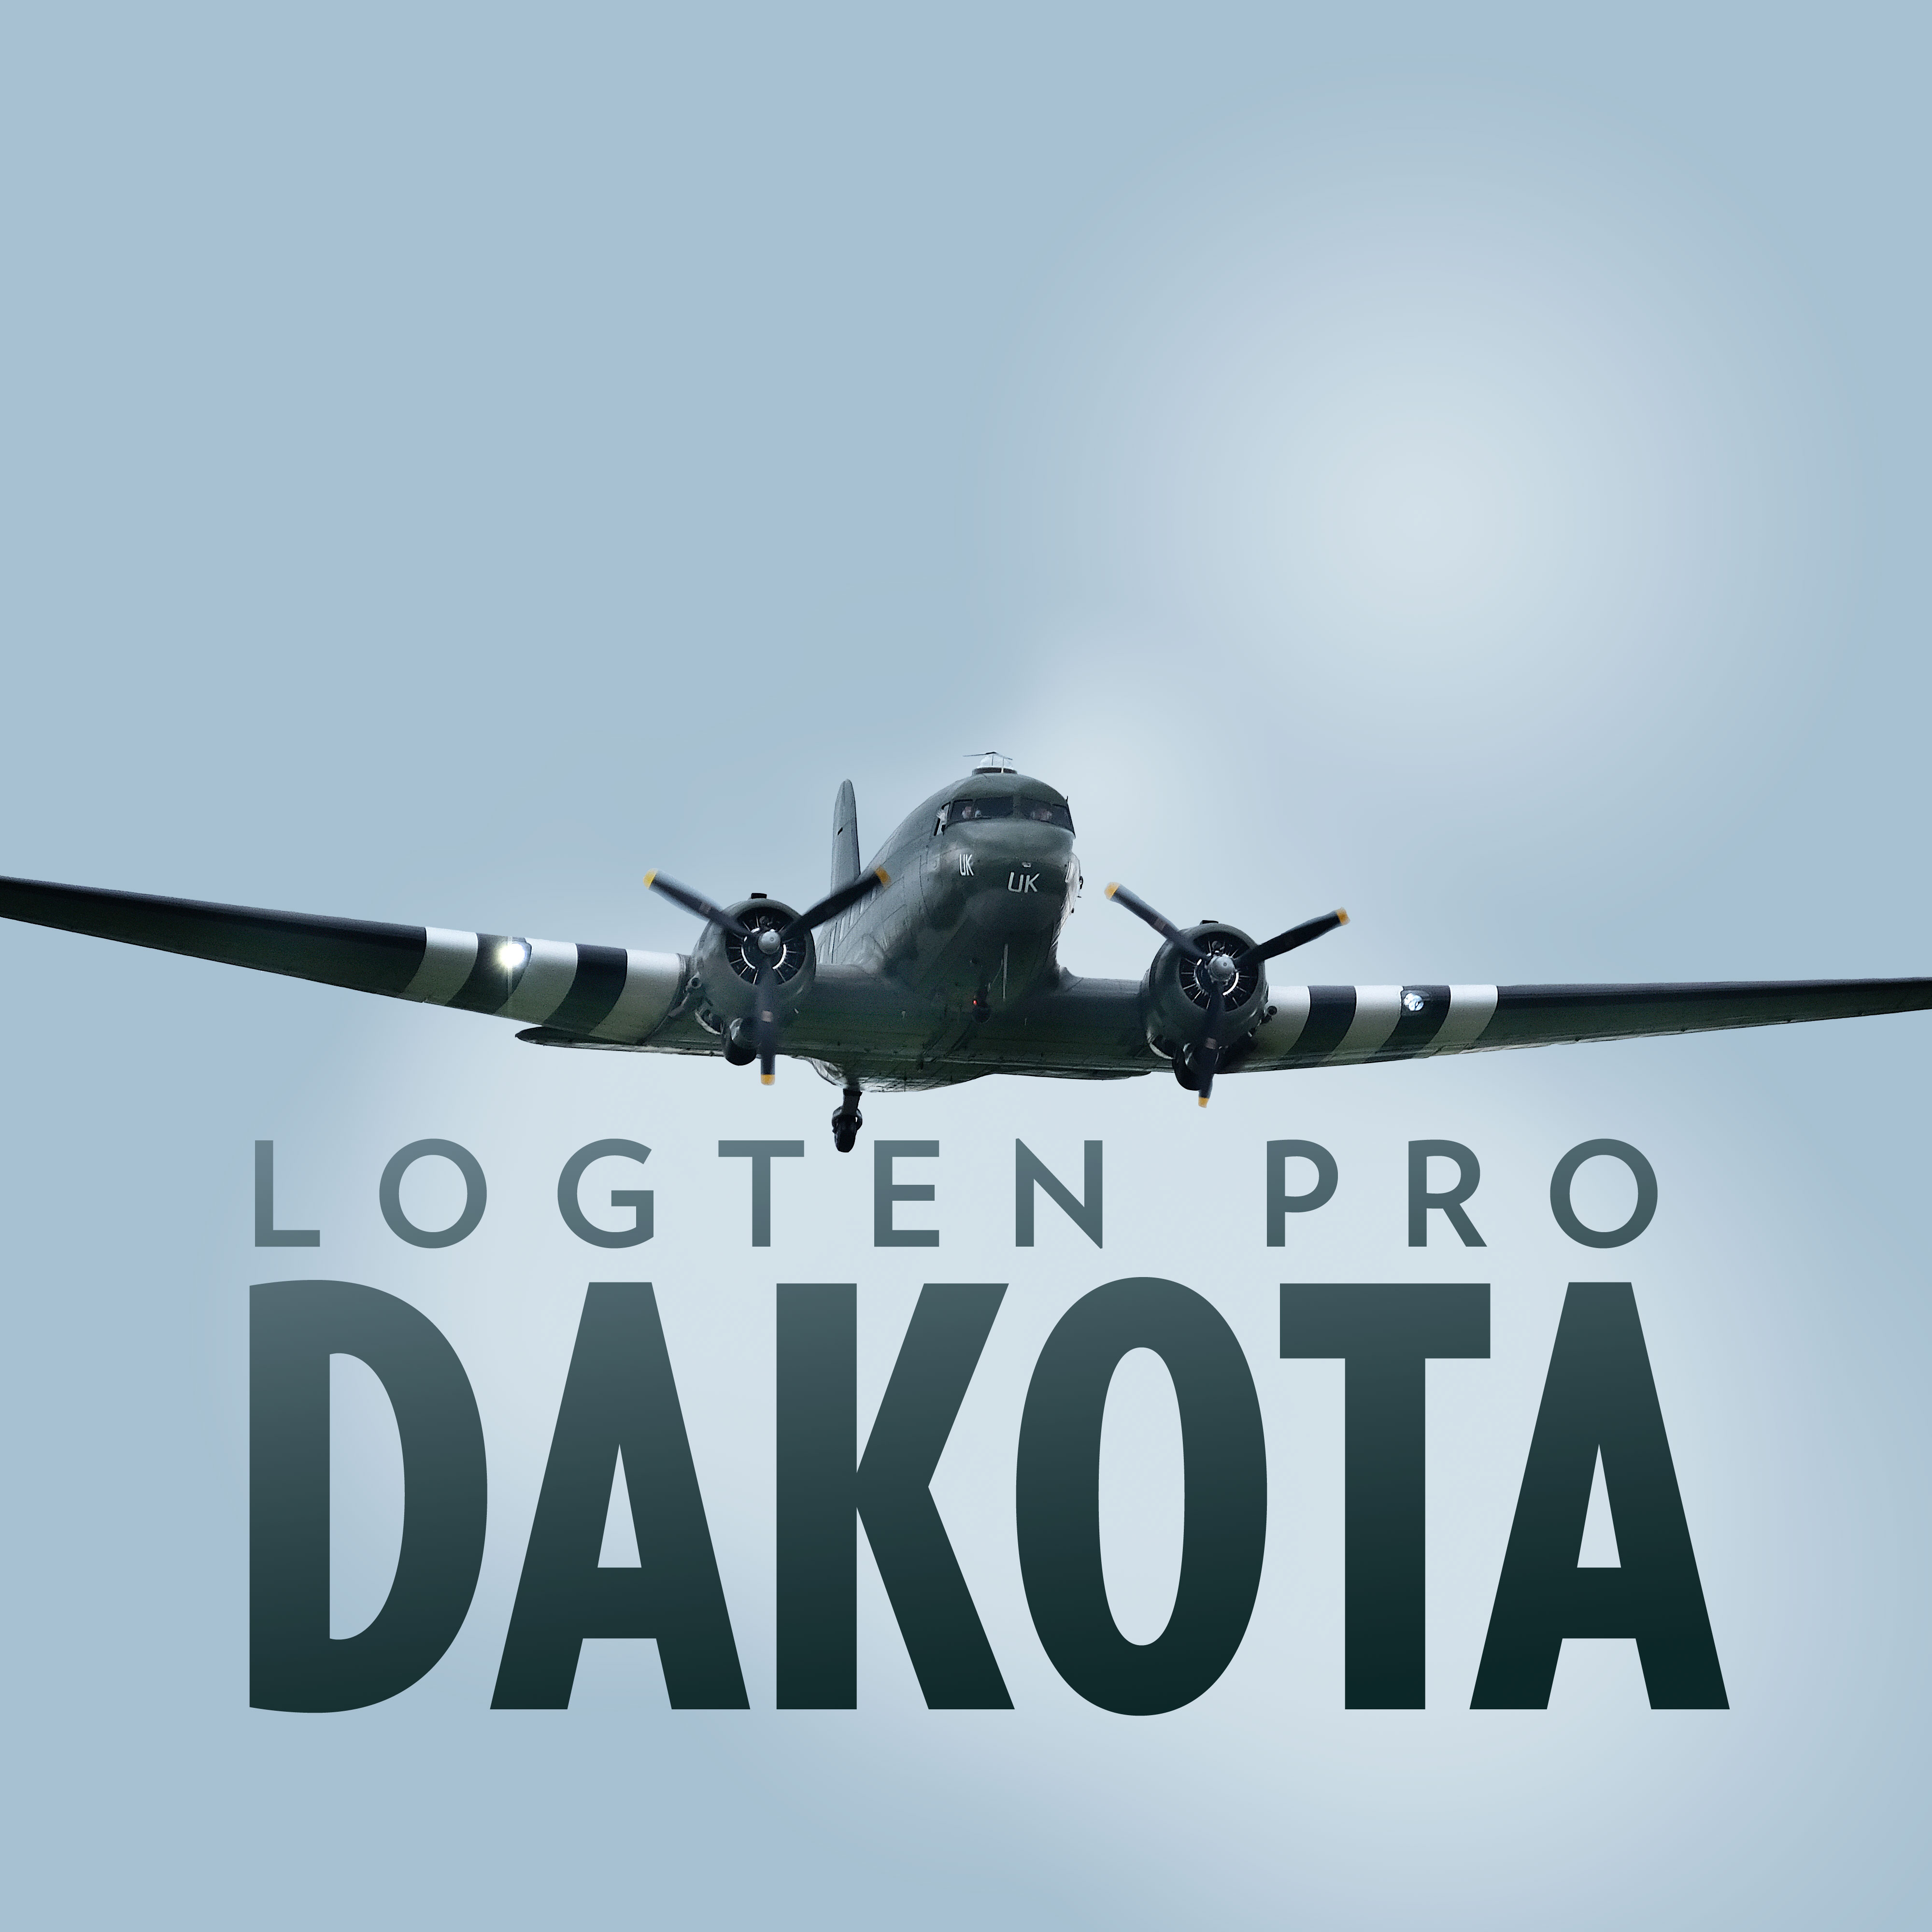 LogTen Pro Dakota